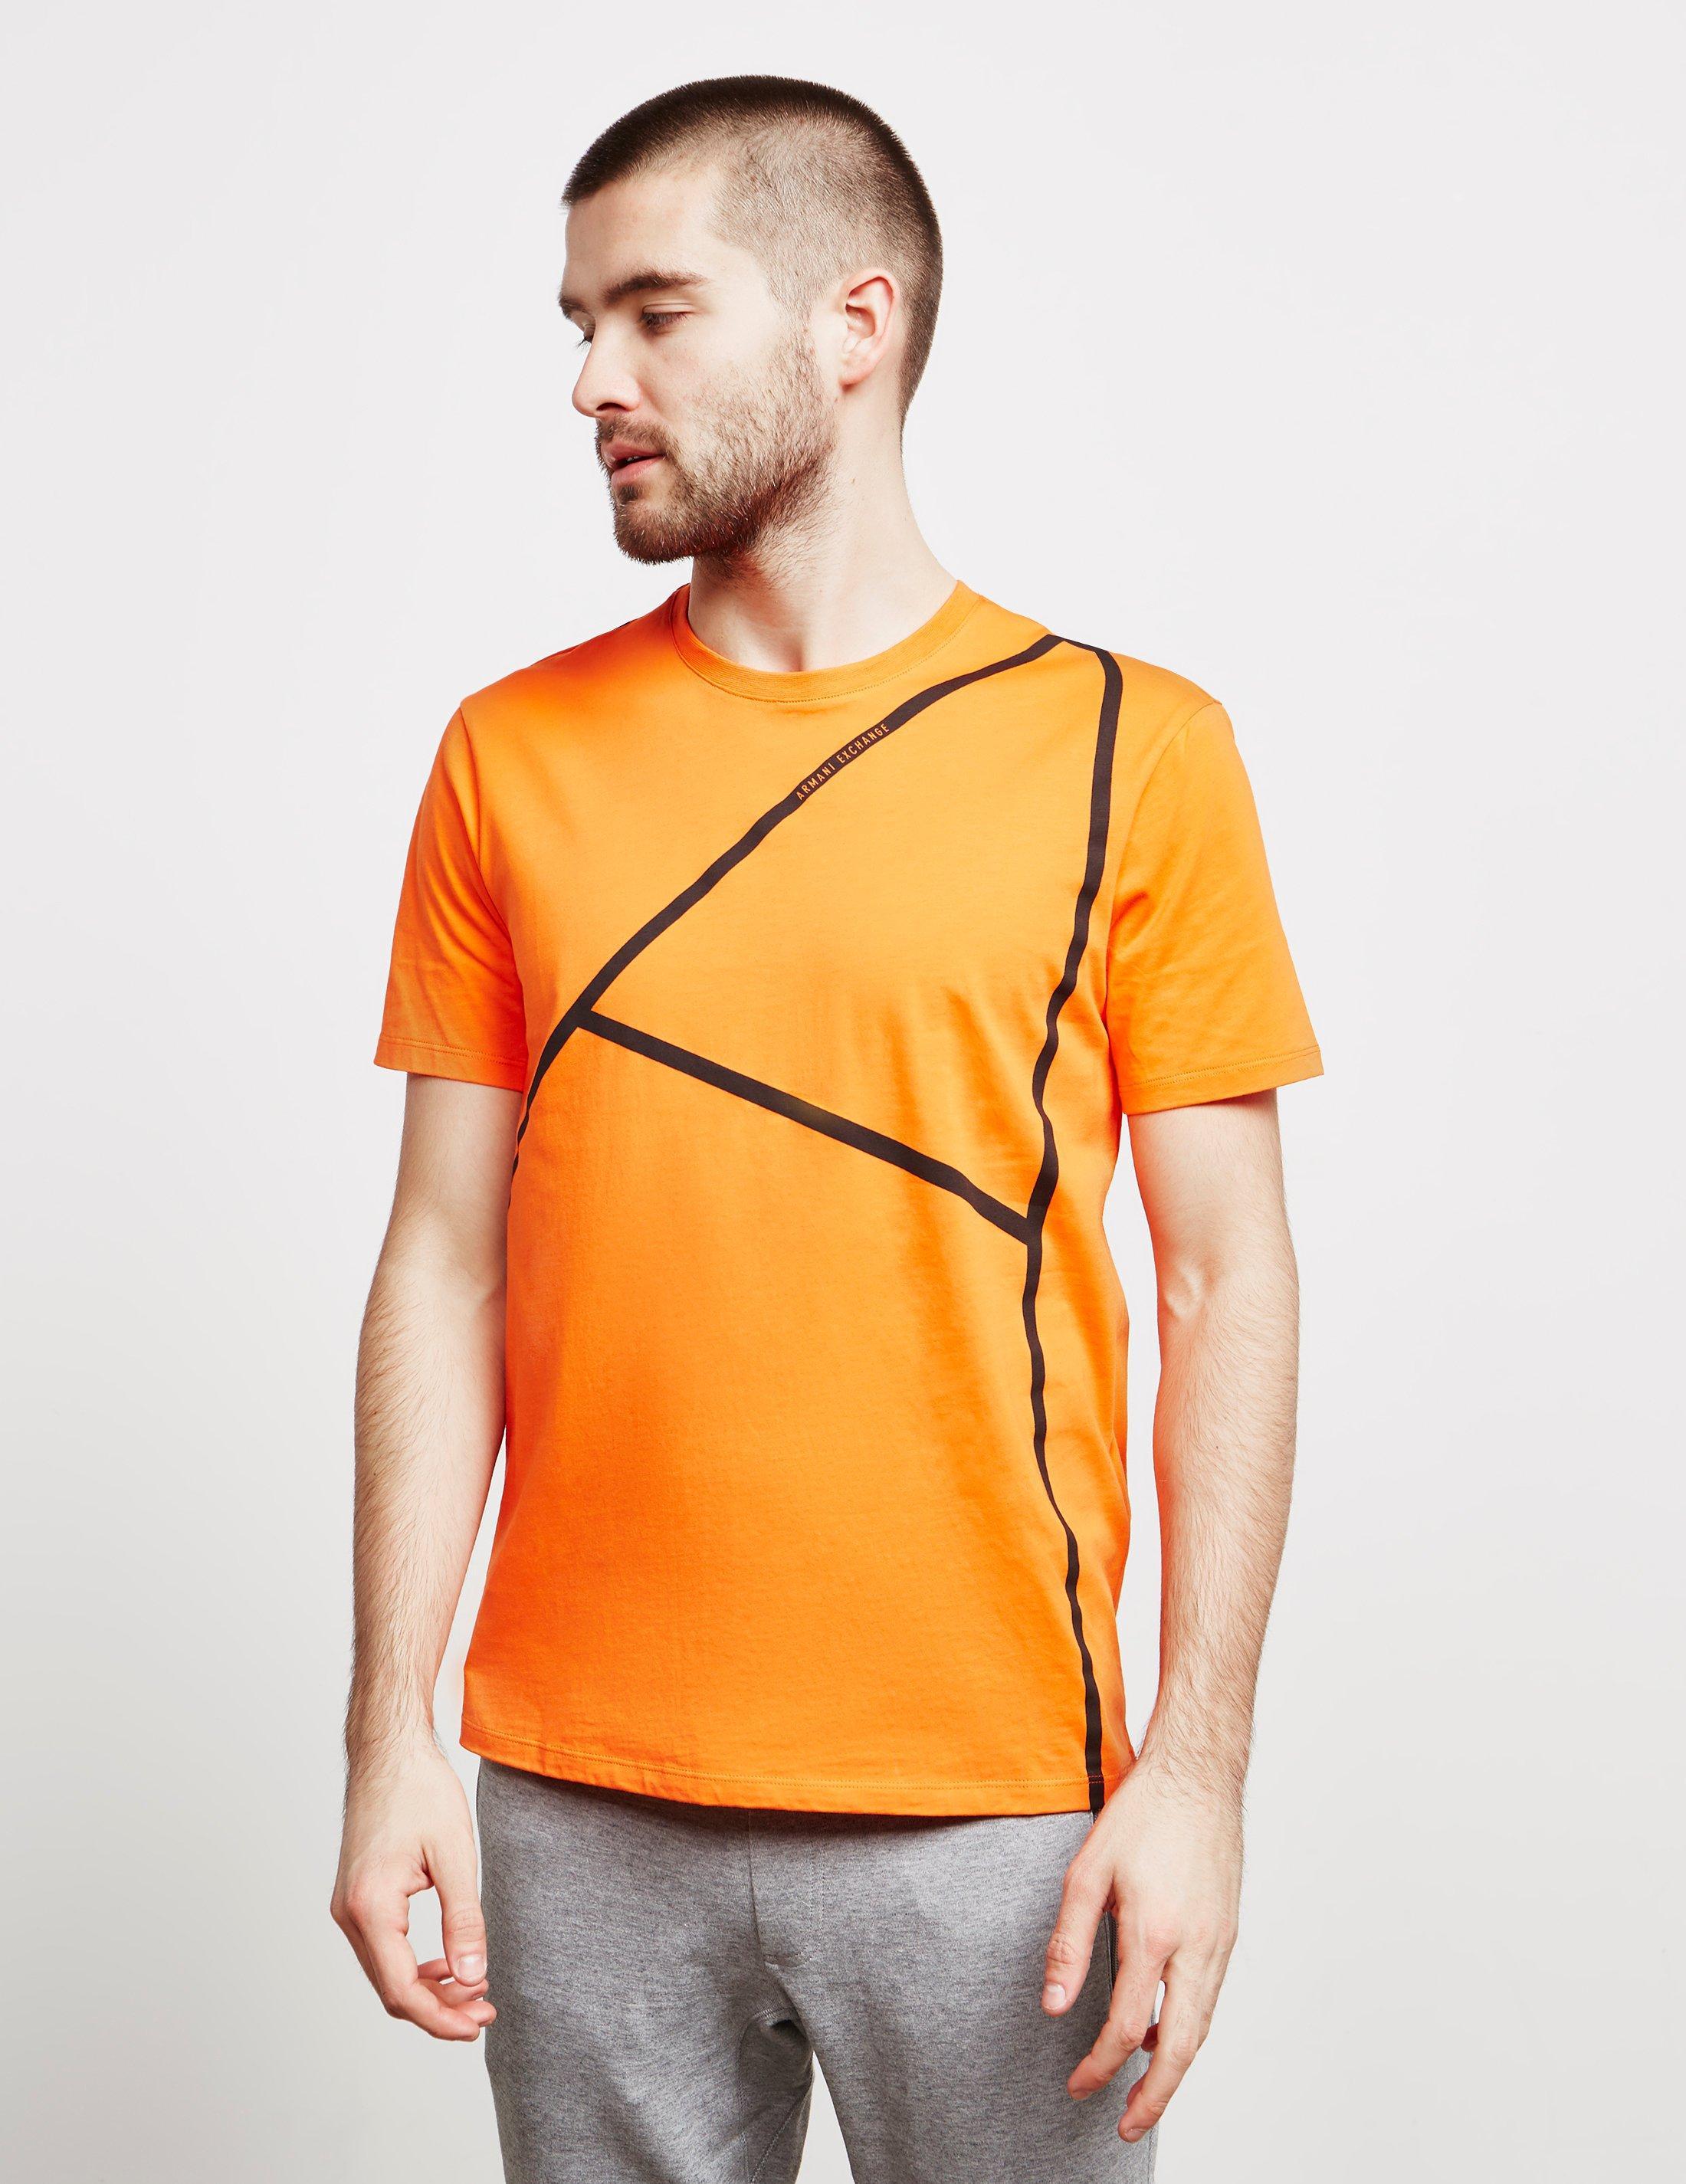 Armani Exchange Stripe Short Sleeve T-shirt Orange for Men - Lyst